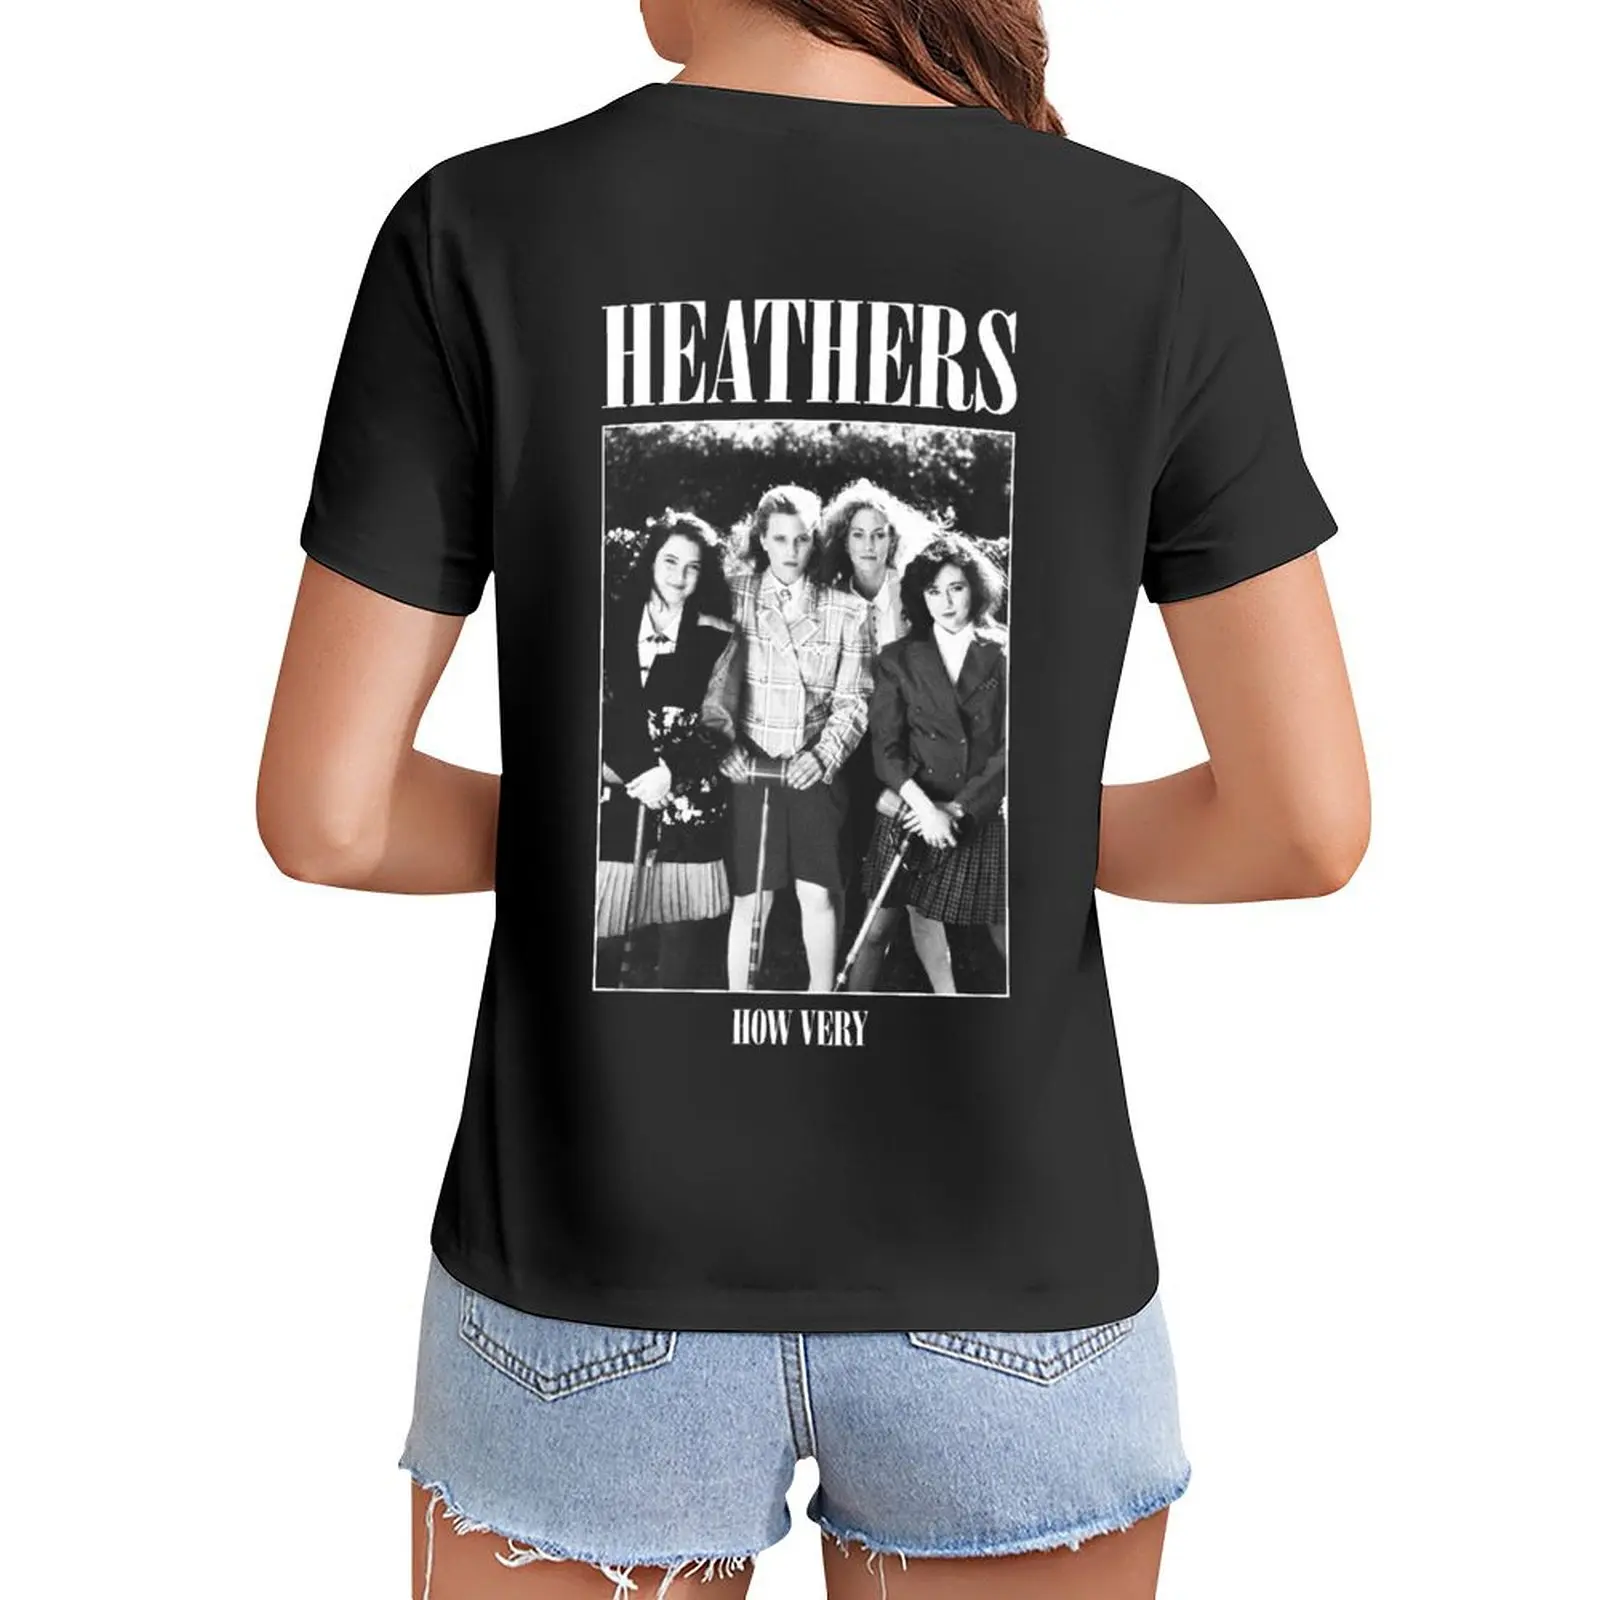 

Heathers: How Very - Rock Shirt Parody T-Shirt new edition animal prinfor animal print black t-shirts for Women